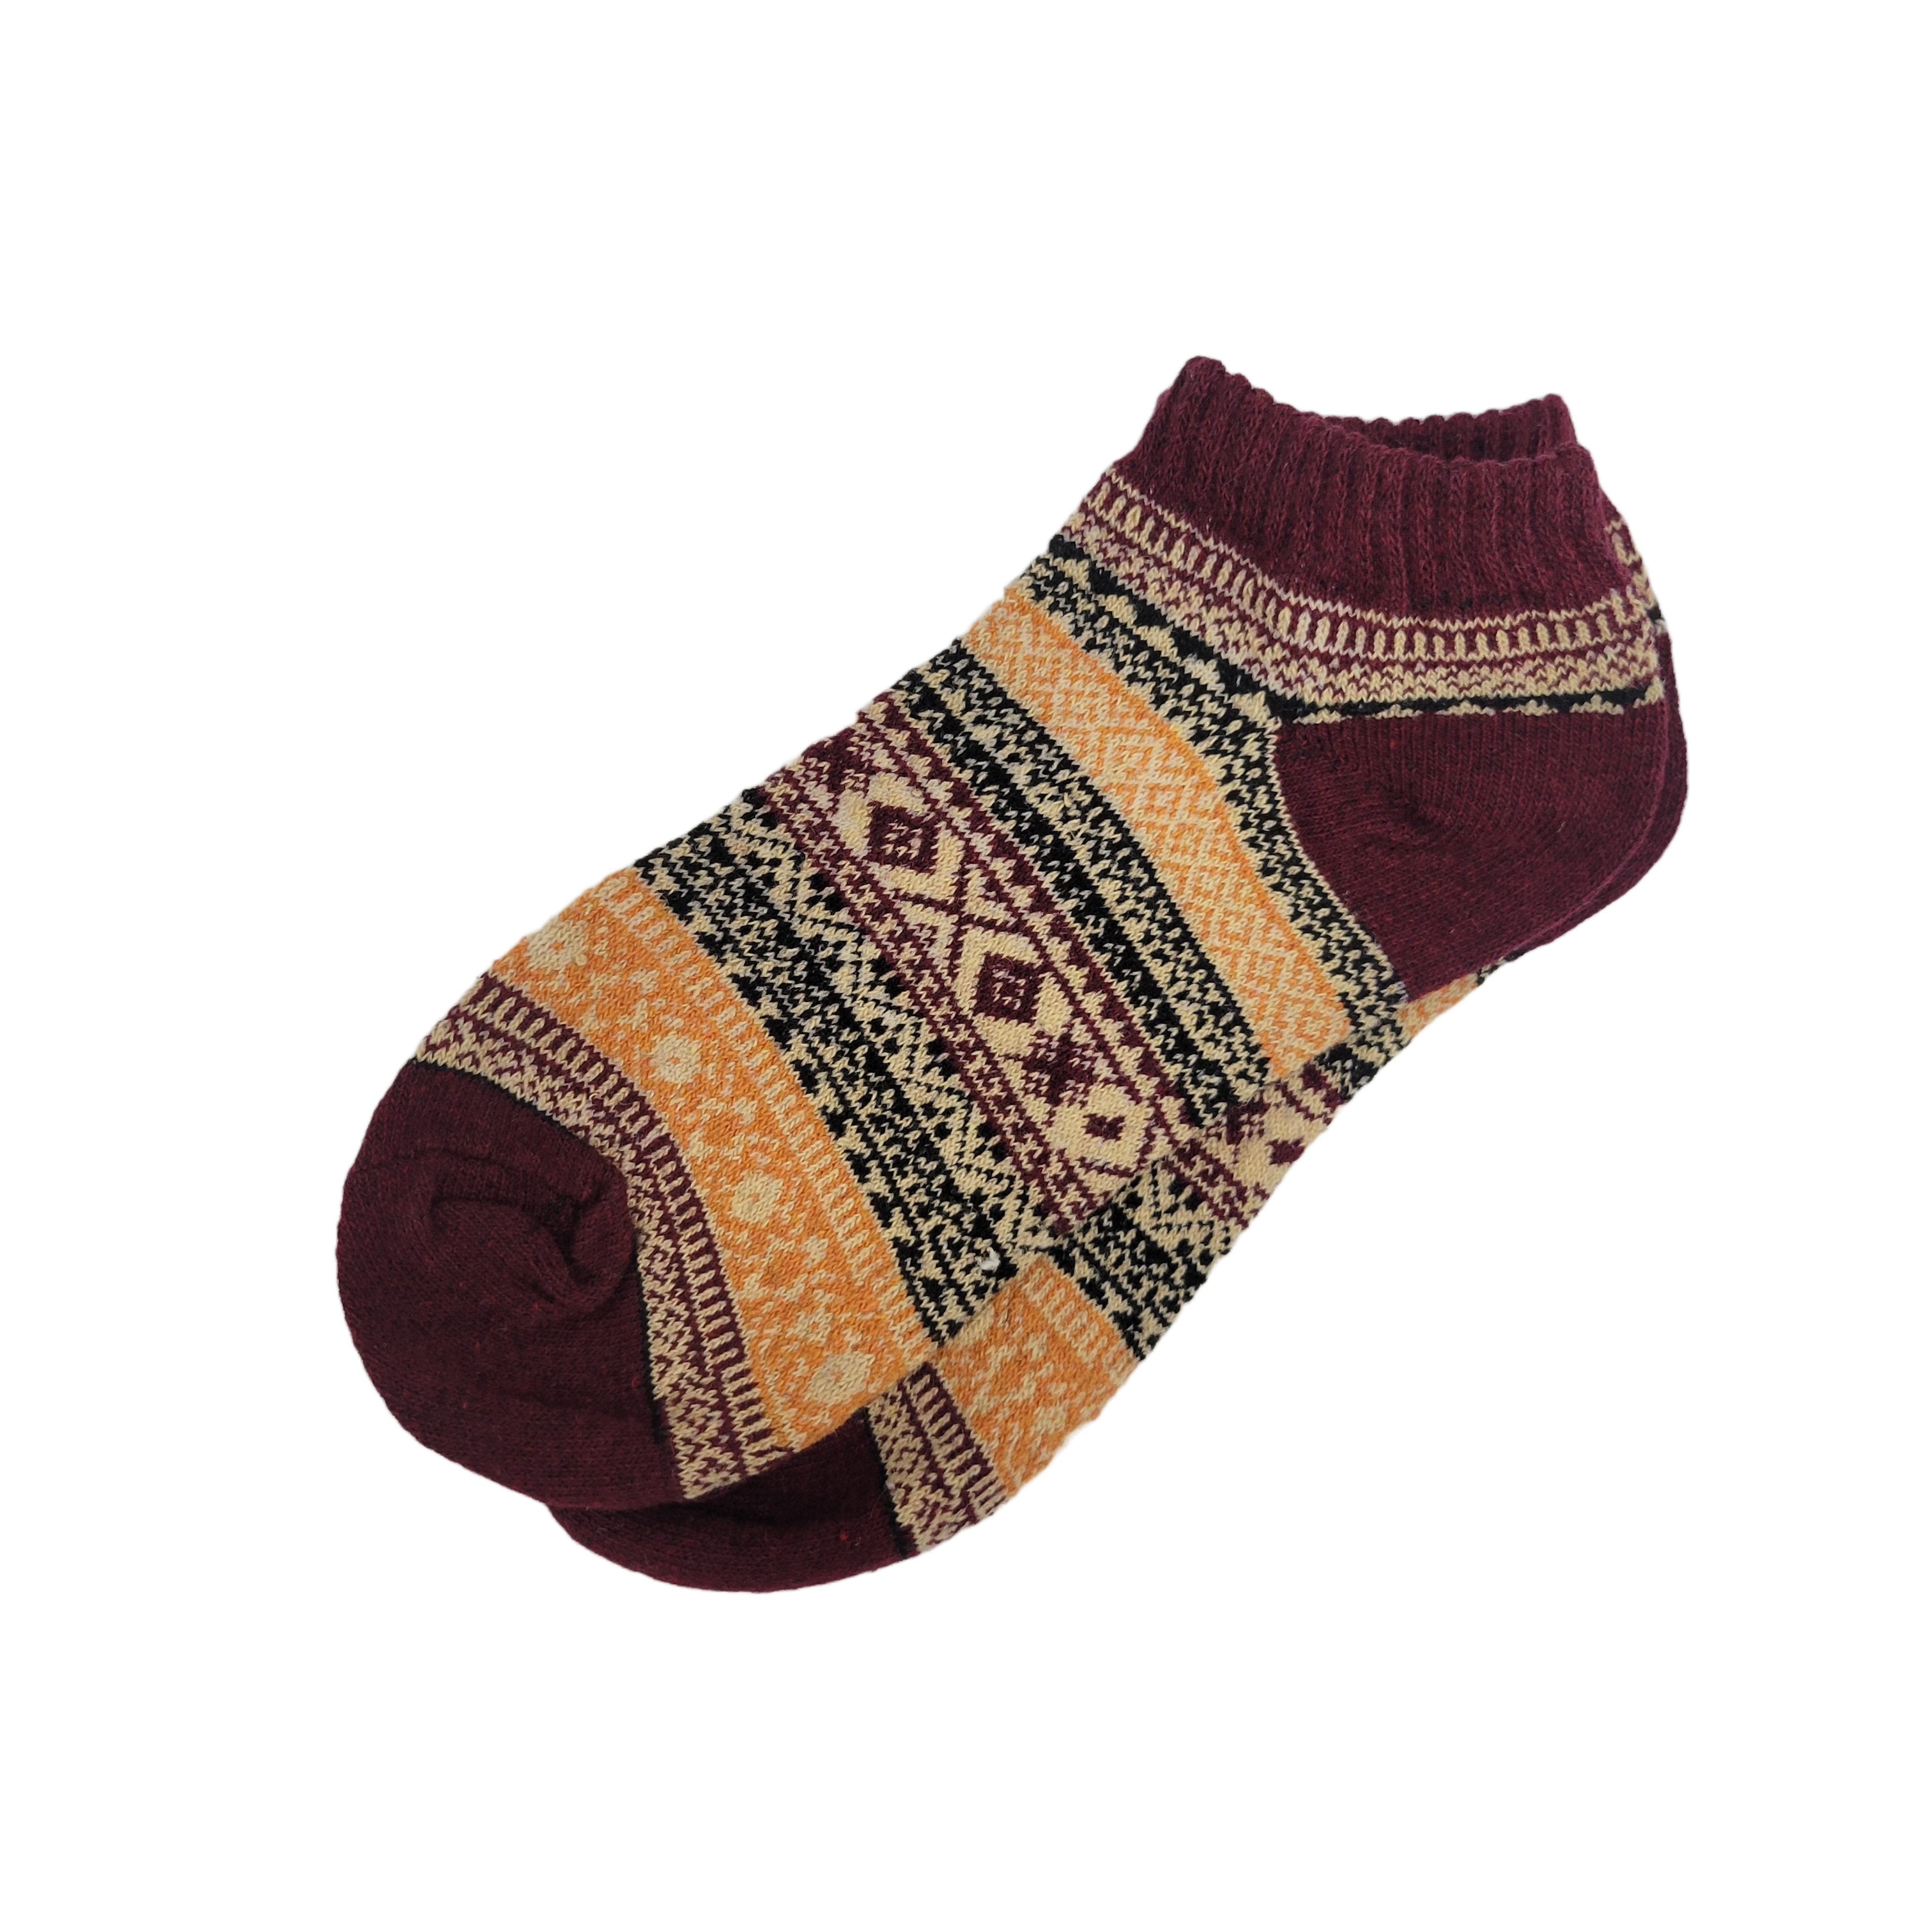 Warm Woolen Block Knitting Ankle Socks (Adult Large)